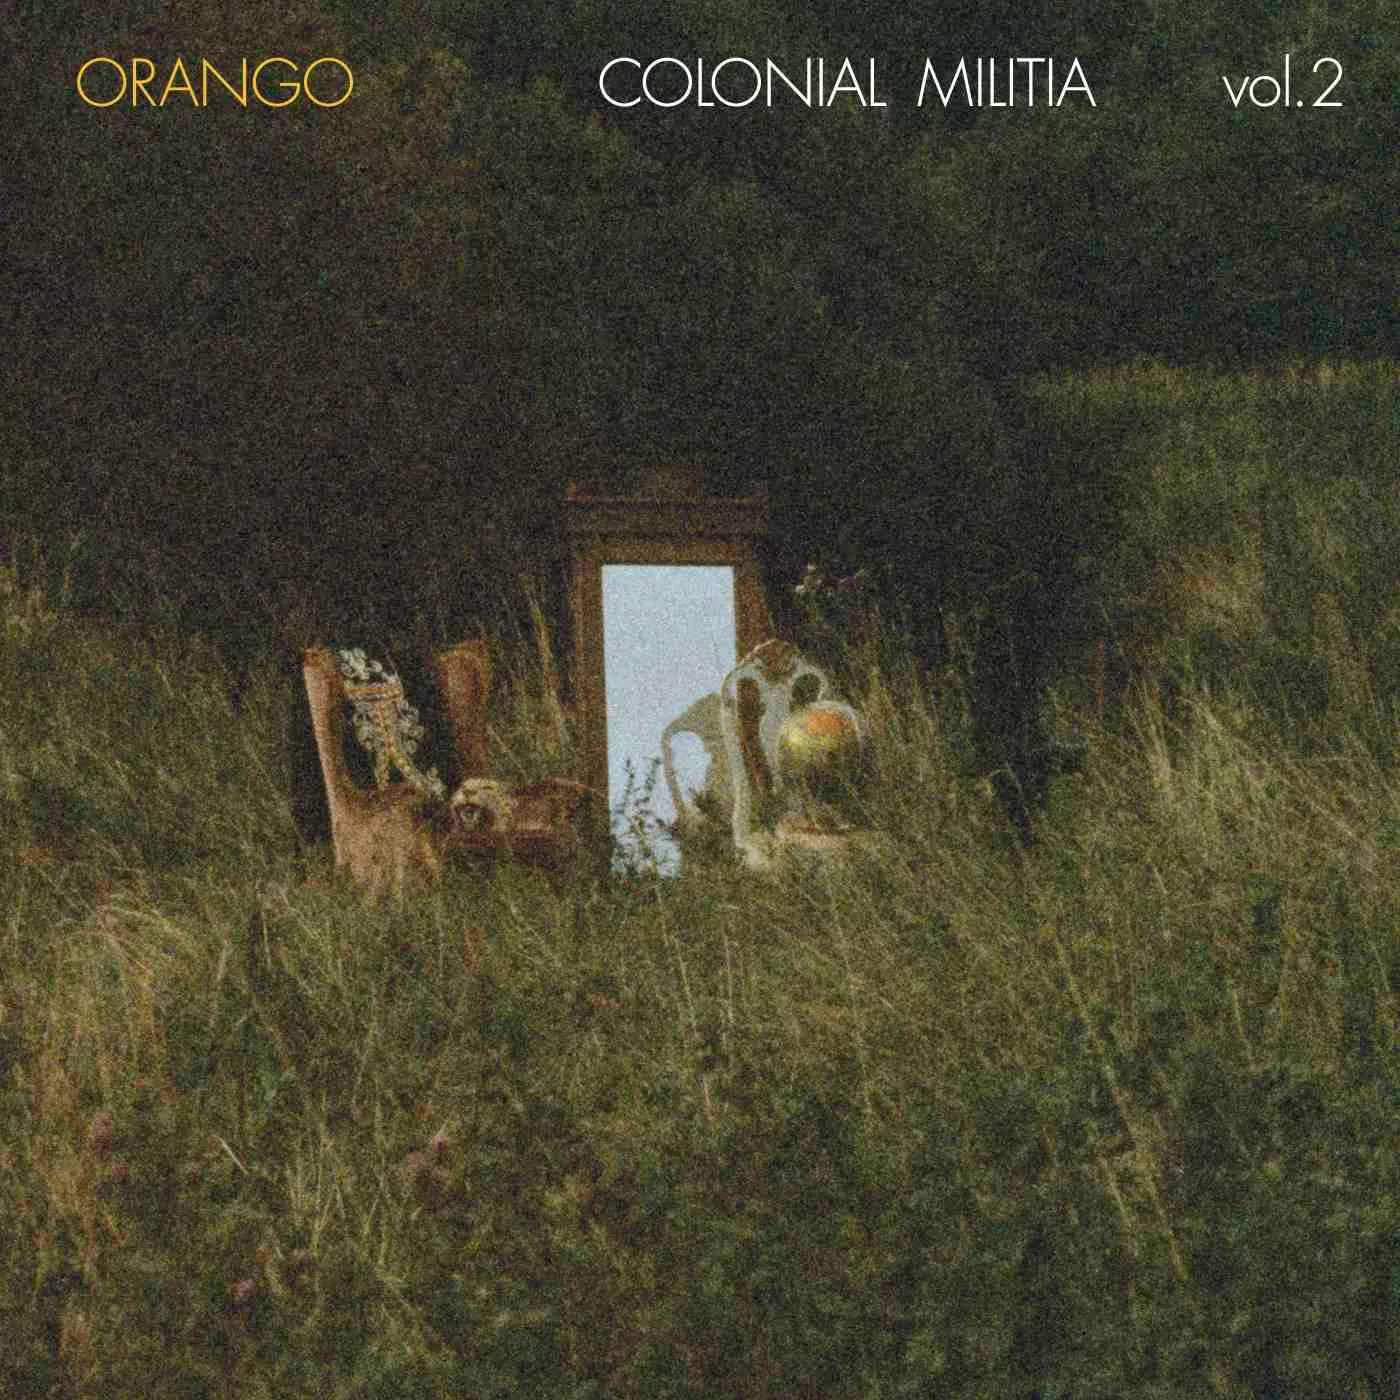 Colonial Militia vol. 2 - Orango